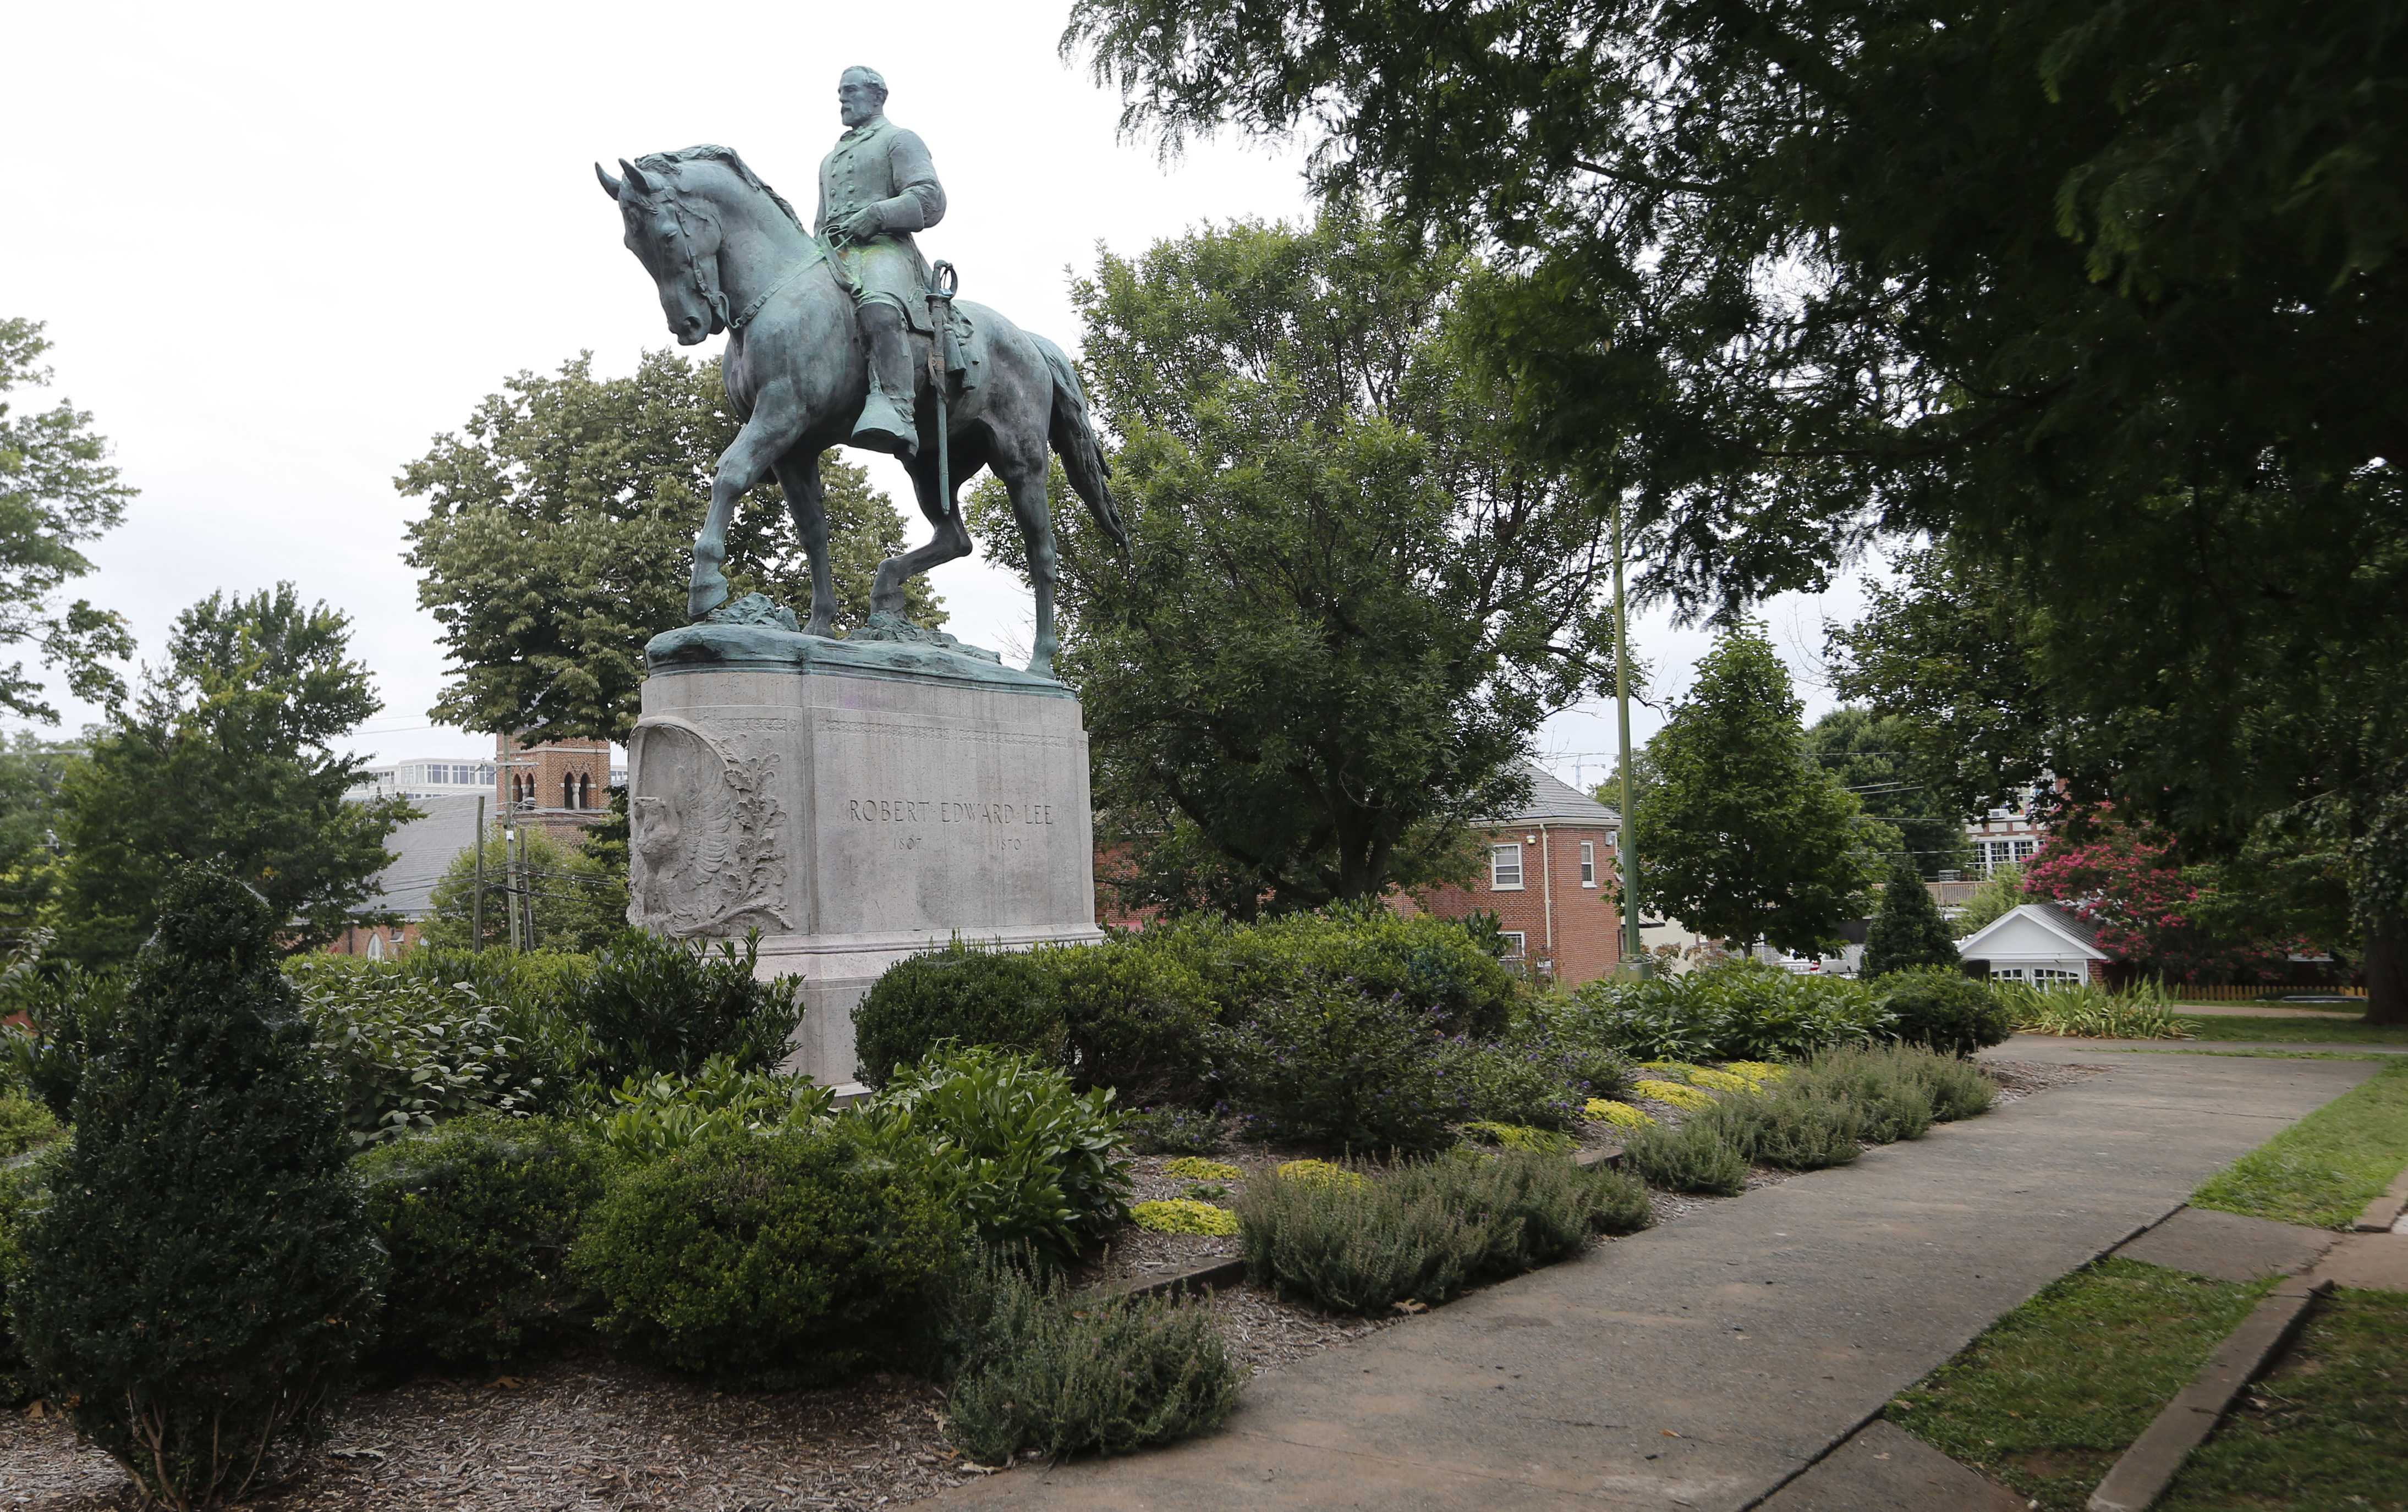 Robert E. Lee on Confederate memorials: 'Wiser not to keep open the sores of war'